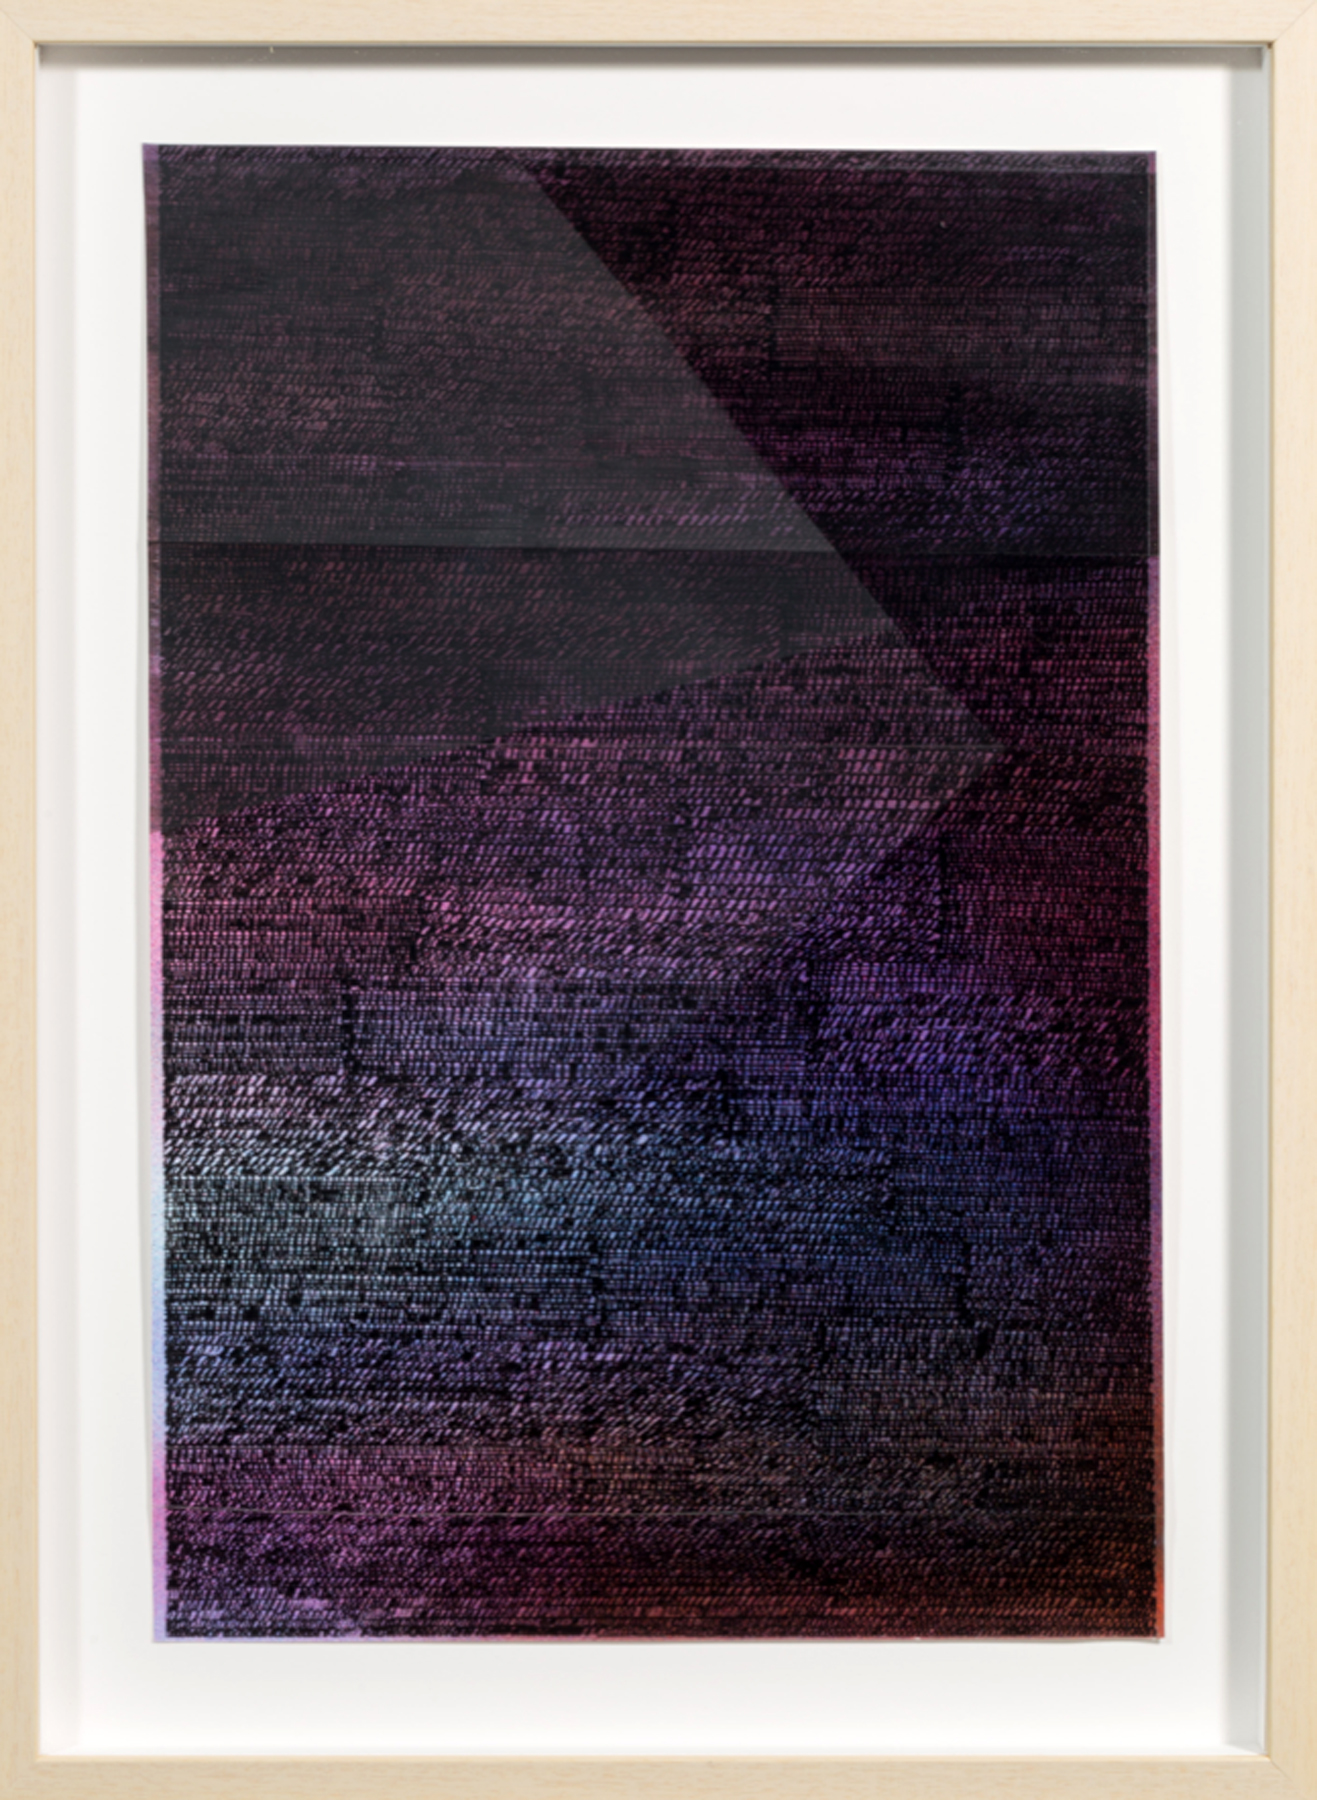 LINDSEY LANDFRIED | Ecstatic Dark, 21.5 x 14.75 inches / 54.5 x 37.5 cm, acrylic on folded paper, 2018